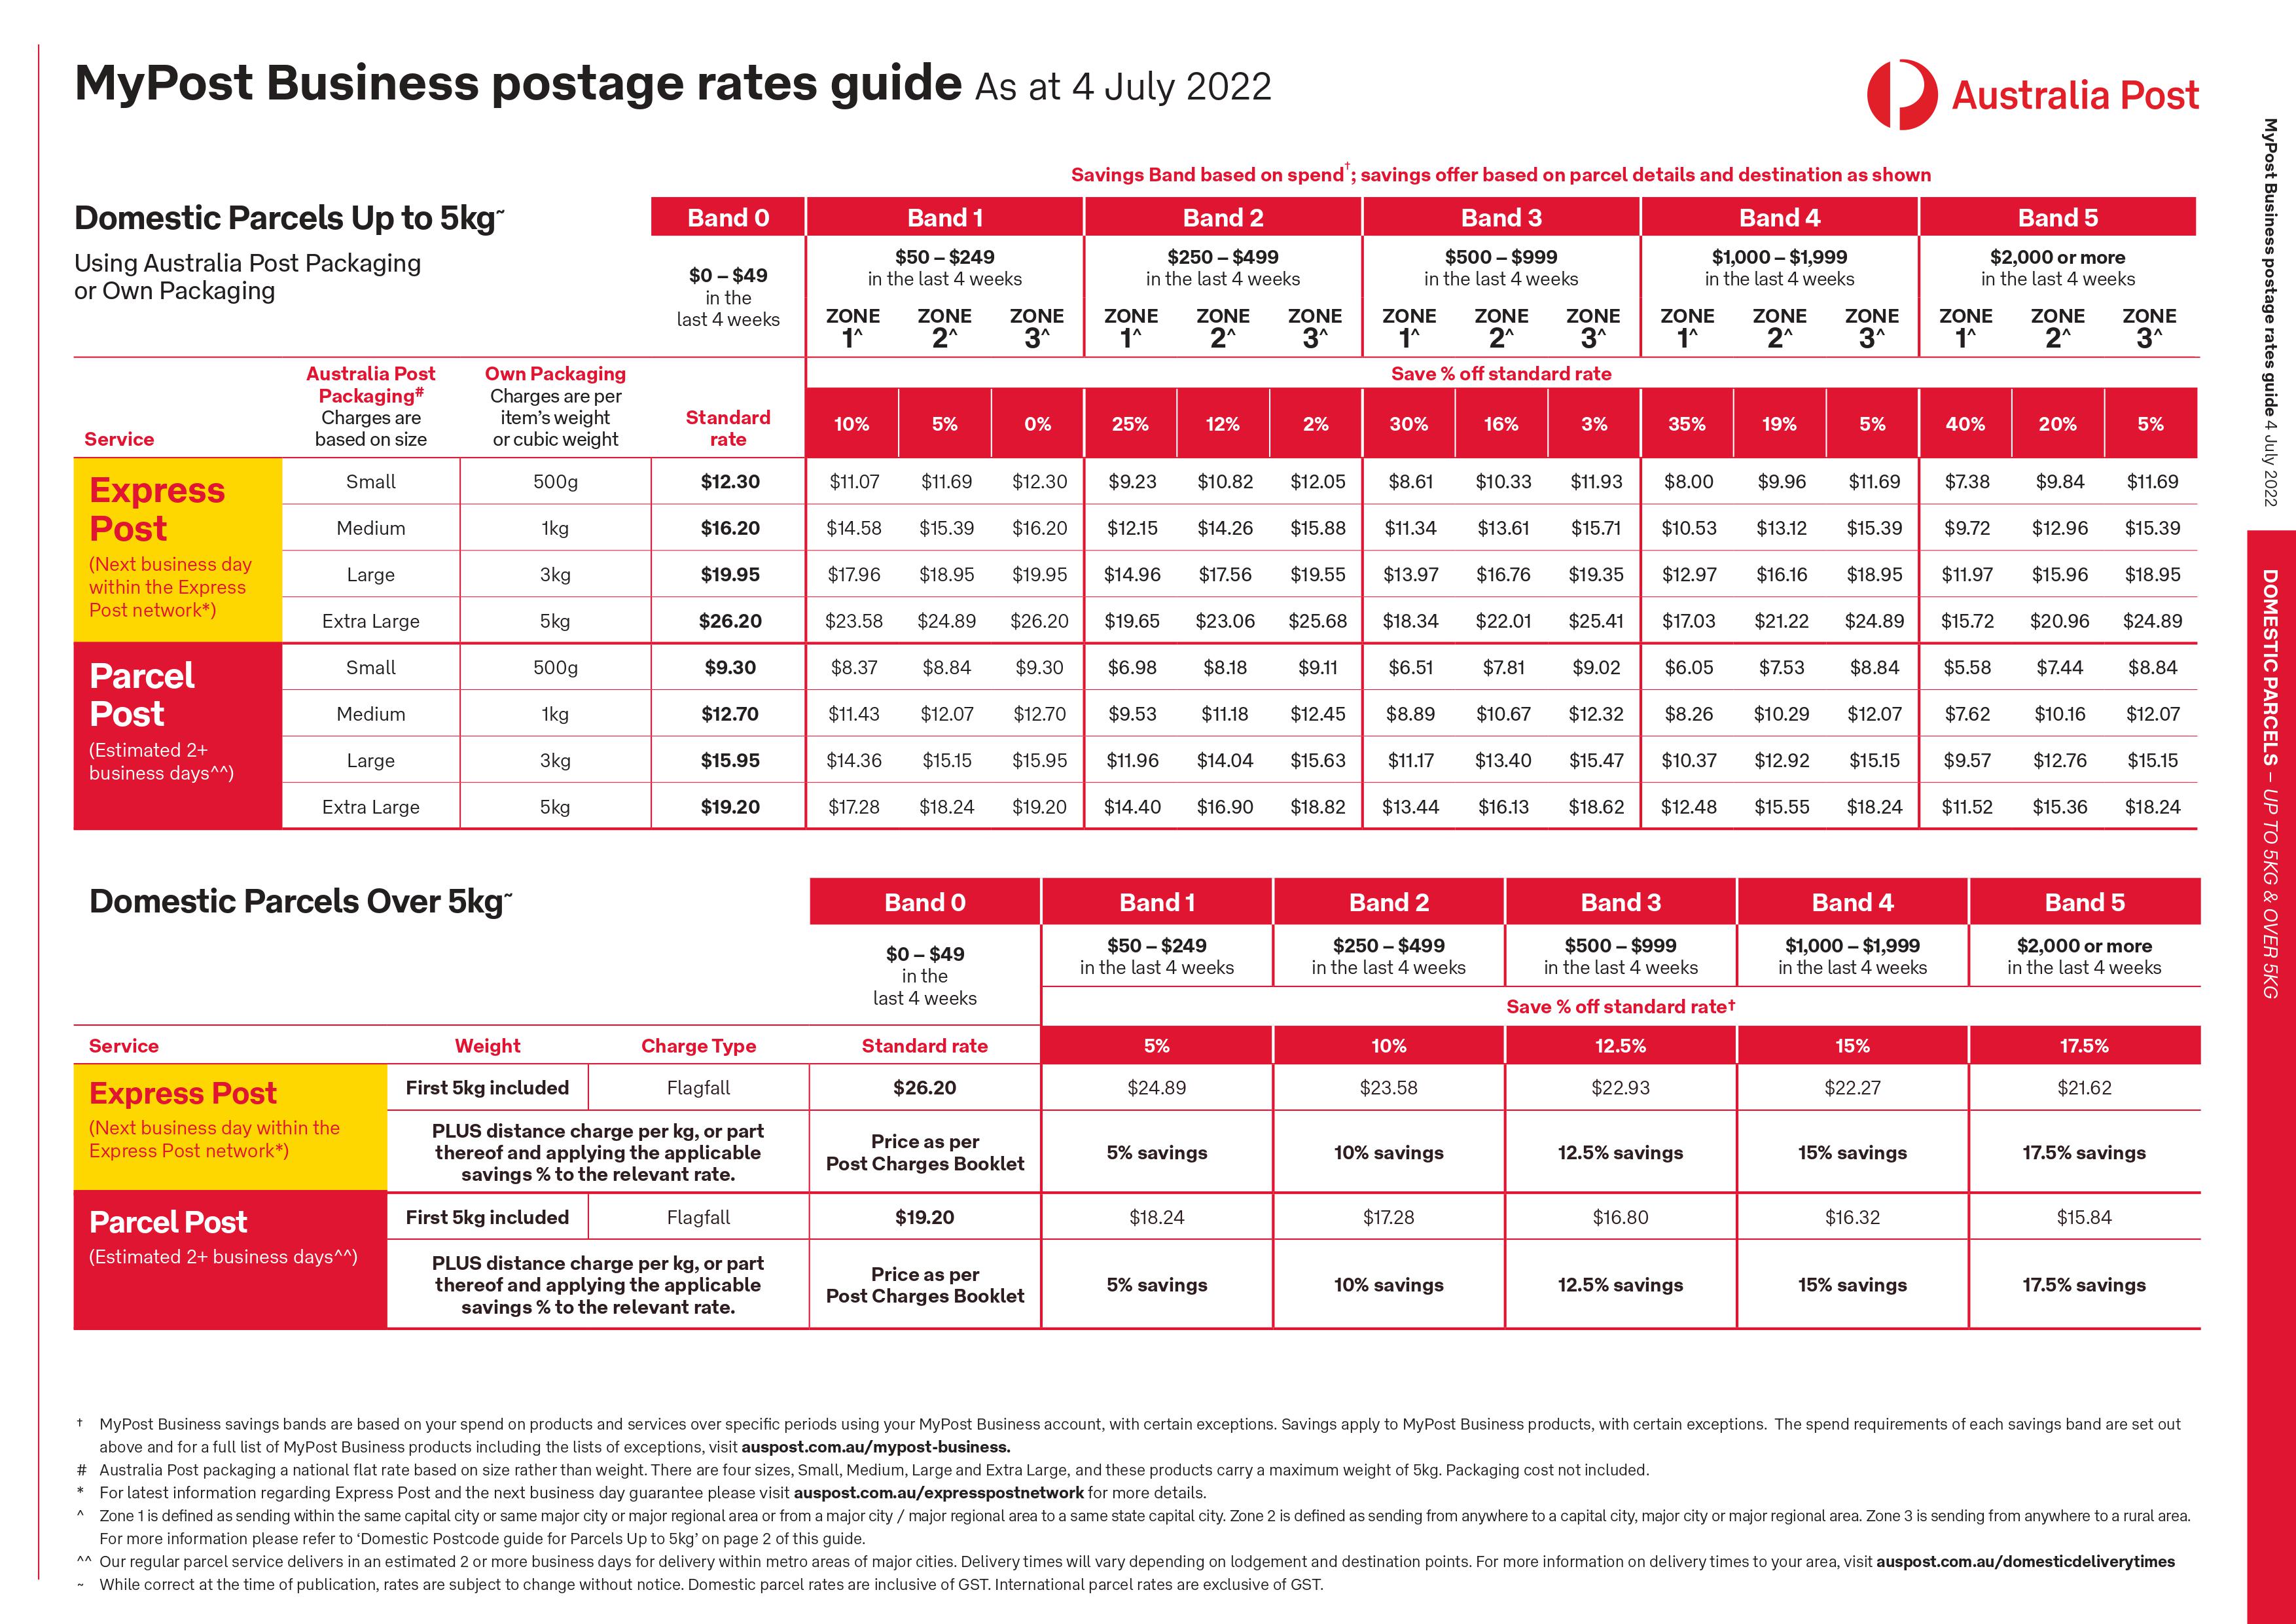 Australia Post MyPost Business Rate Guide